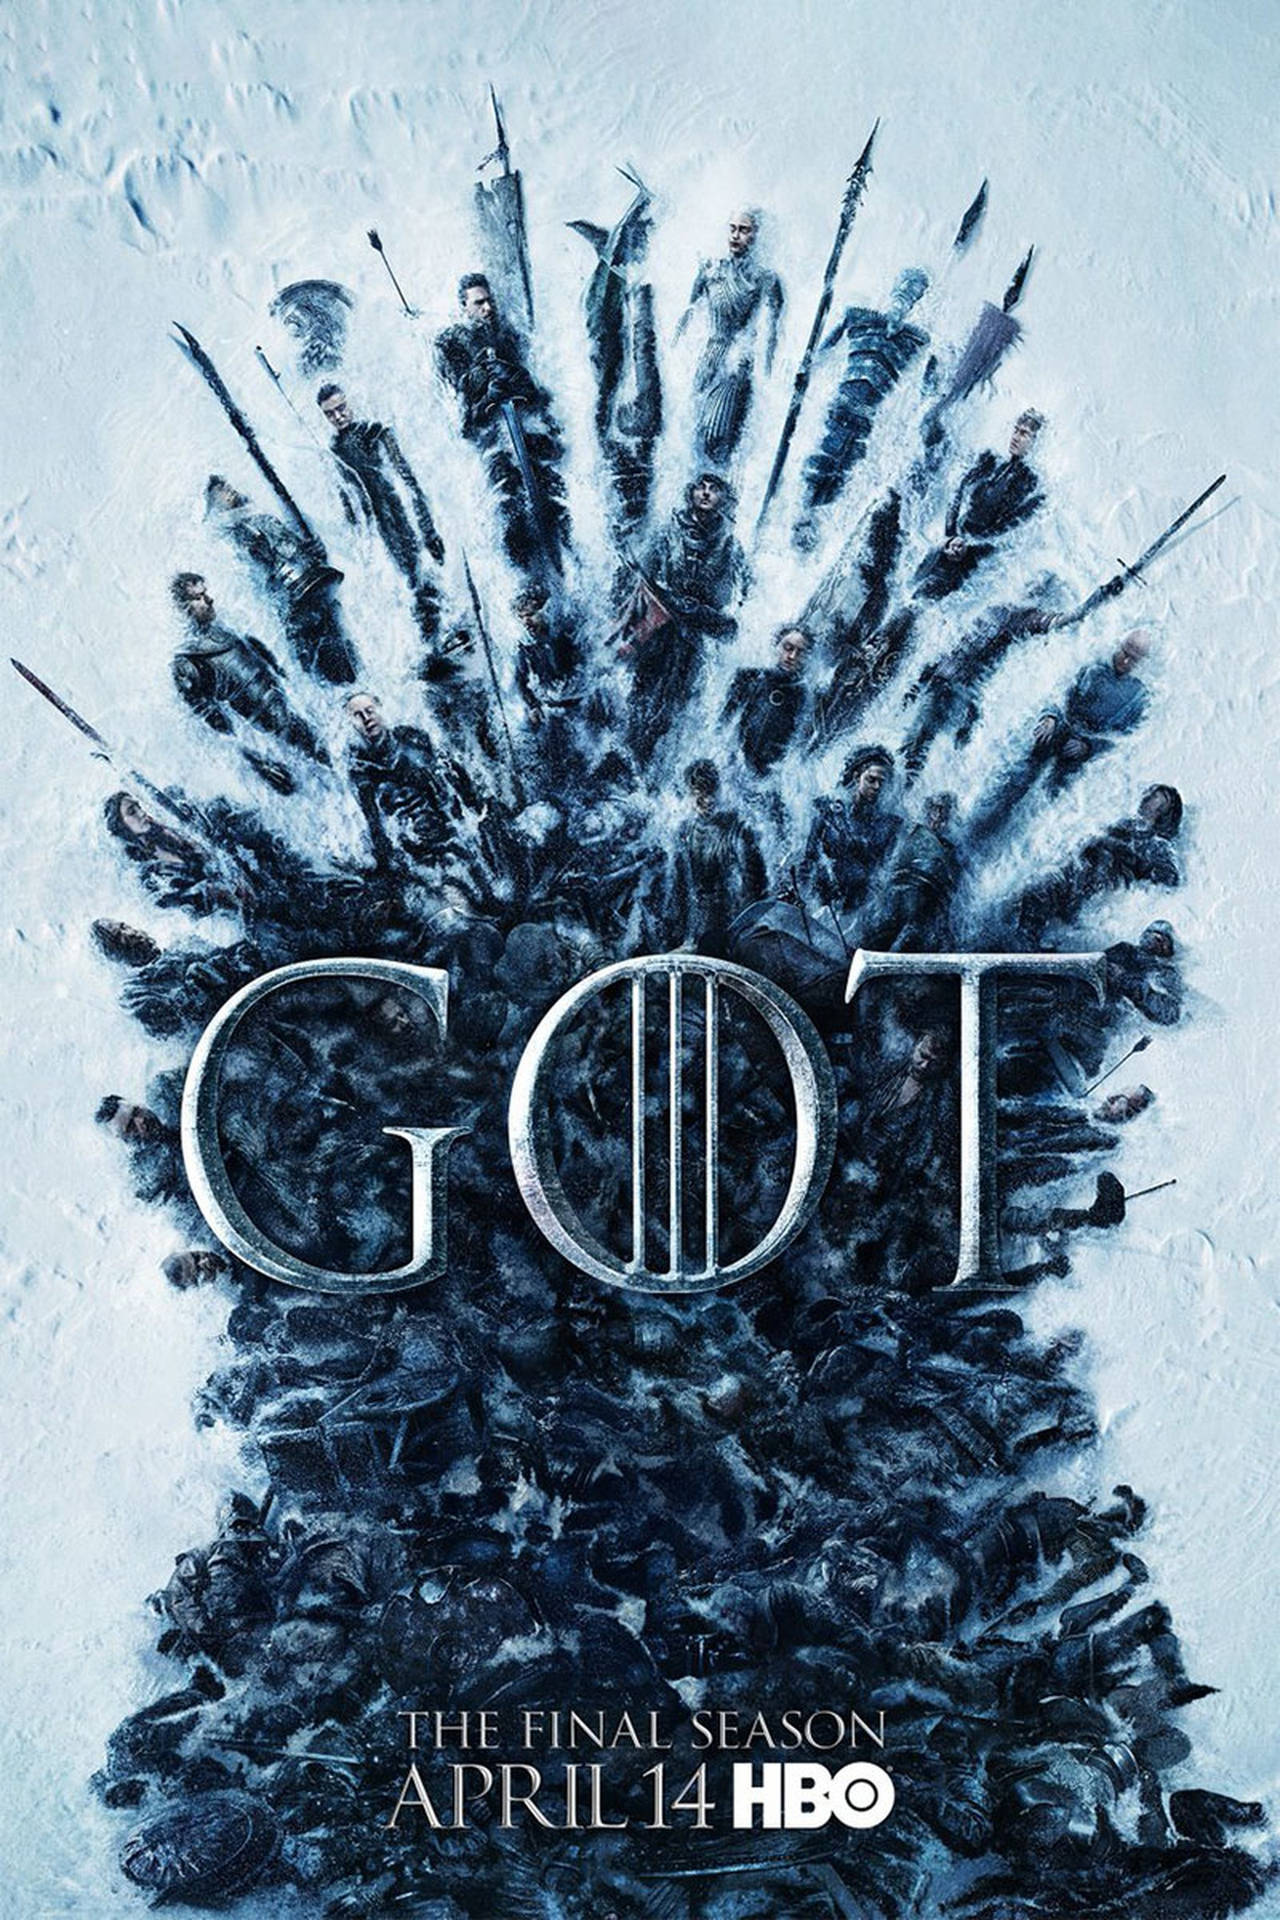 HBO GOT Cast Poster